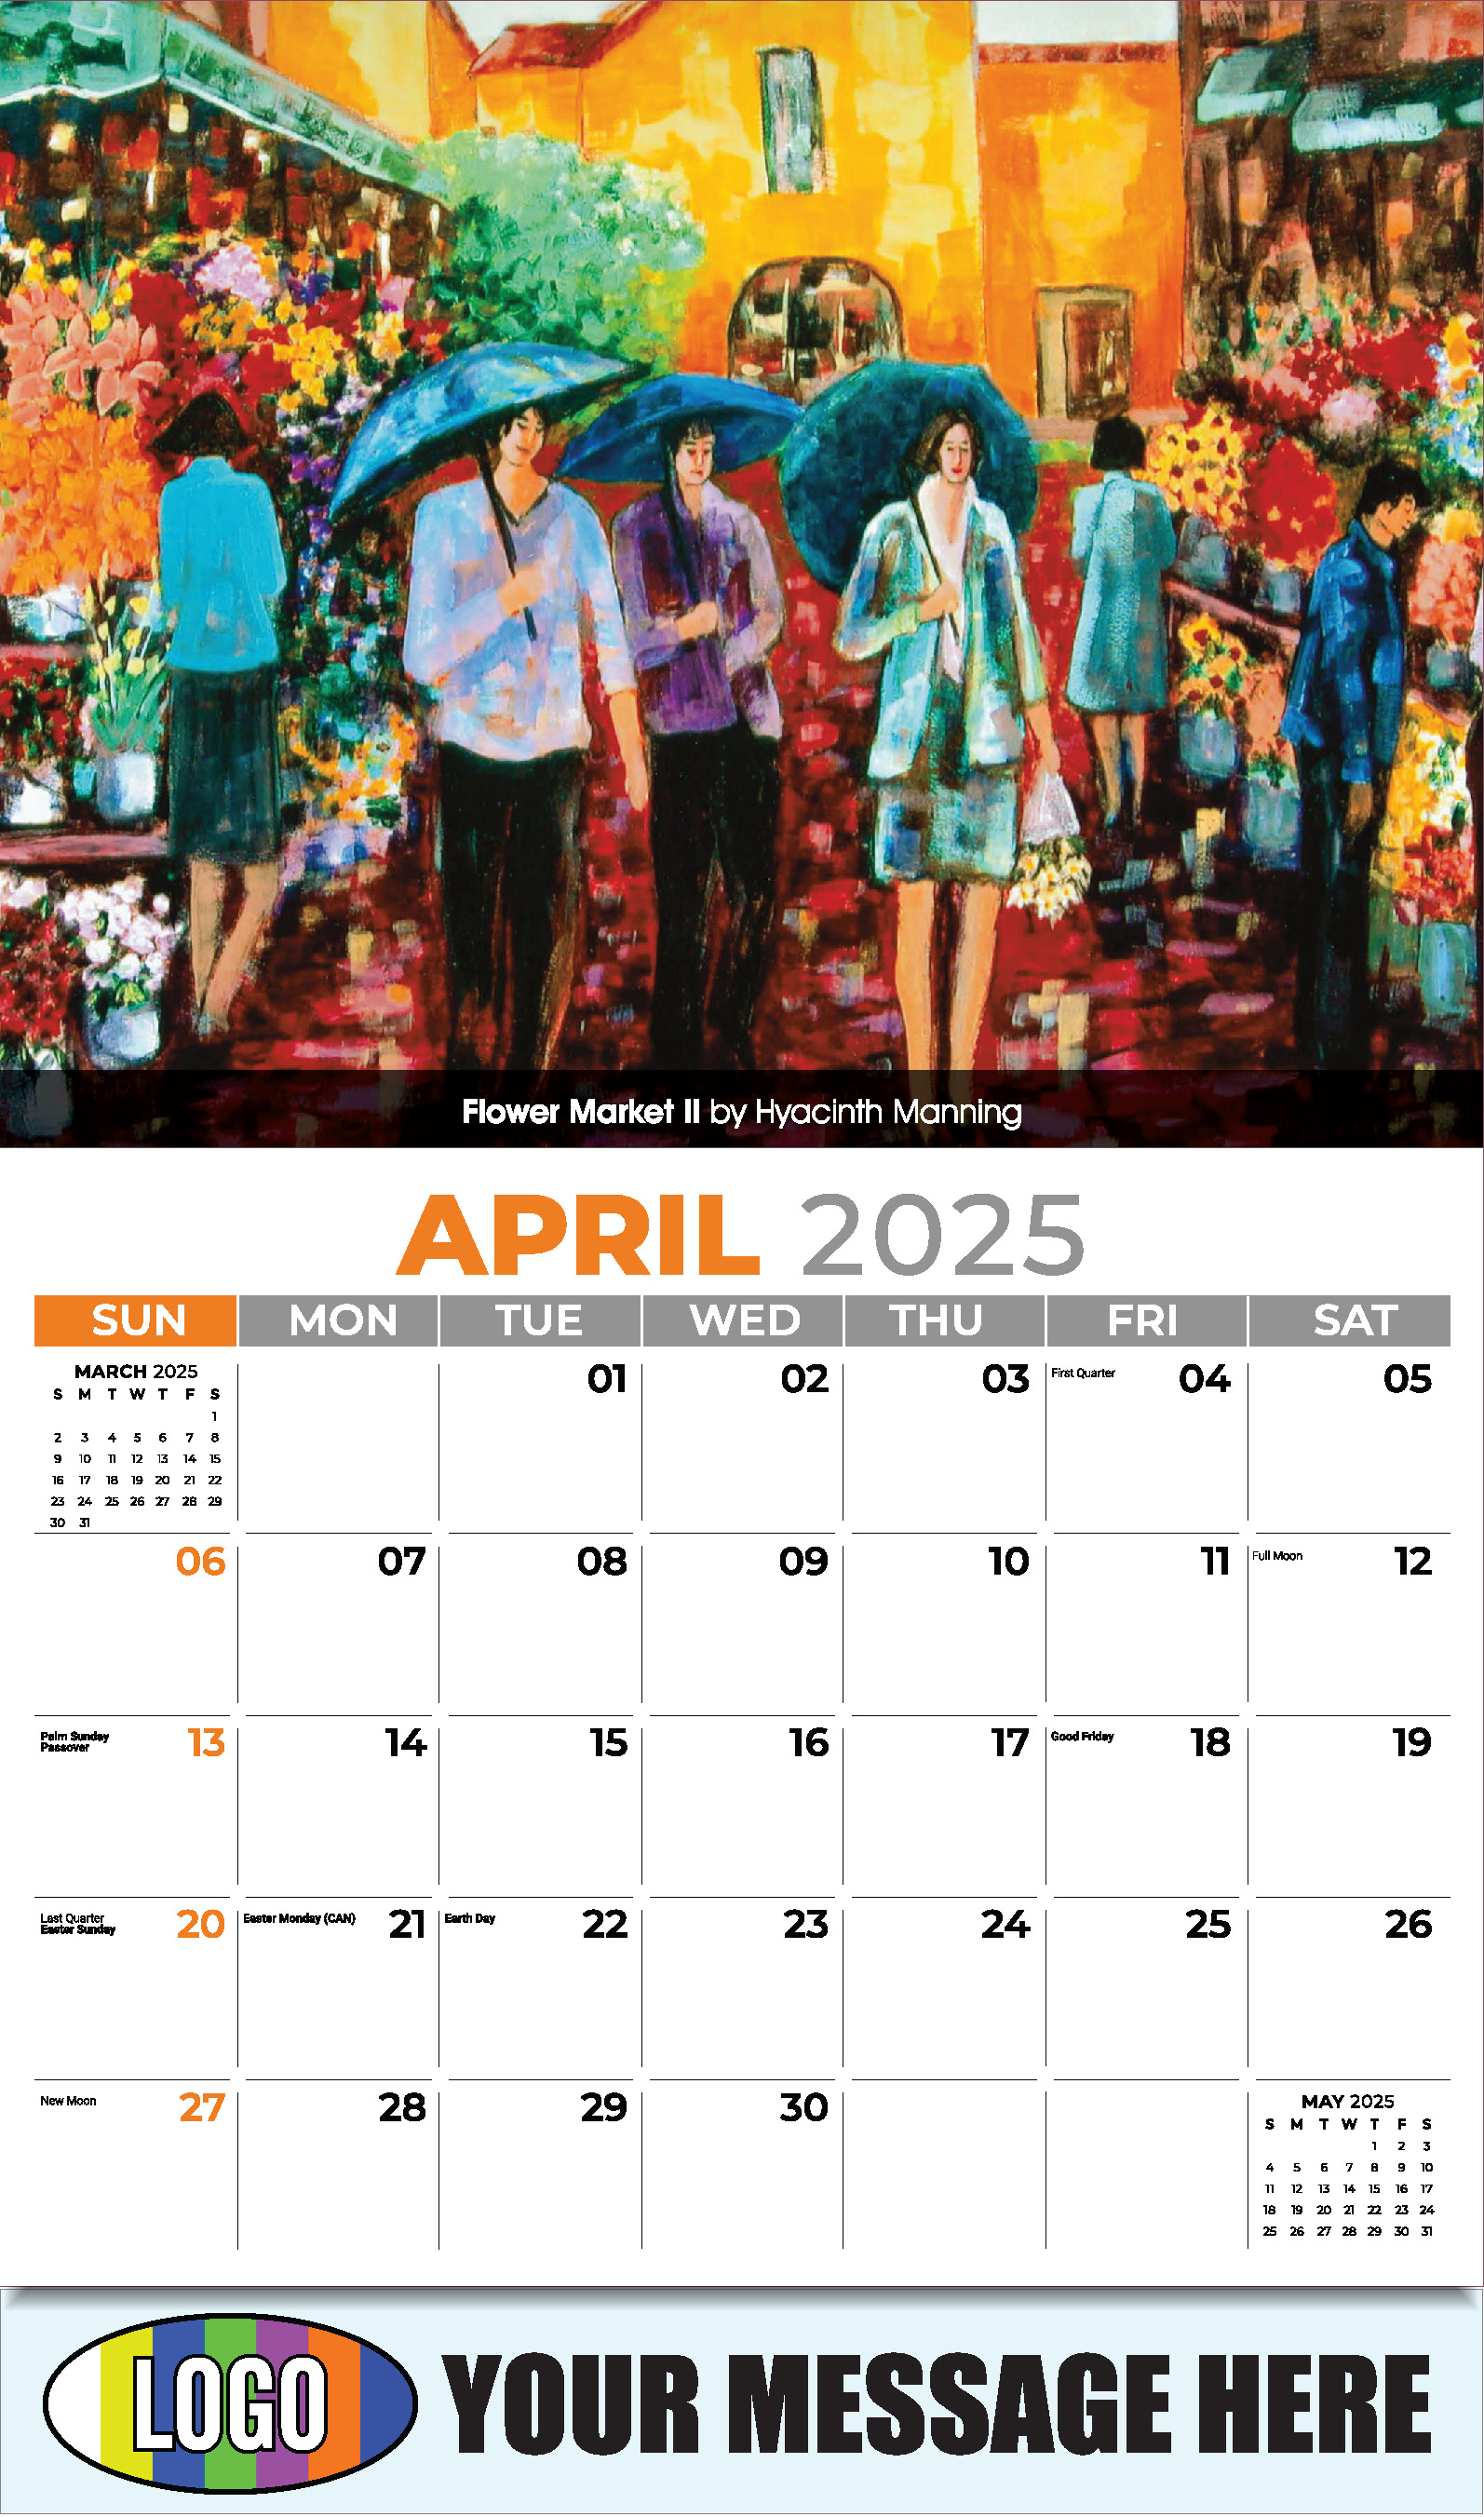 Celebration of African American Art 2025 Business Promotional Calendar - April